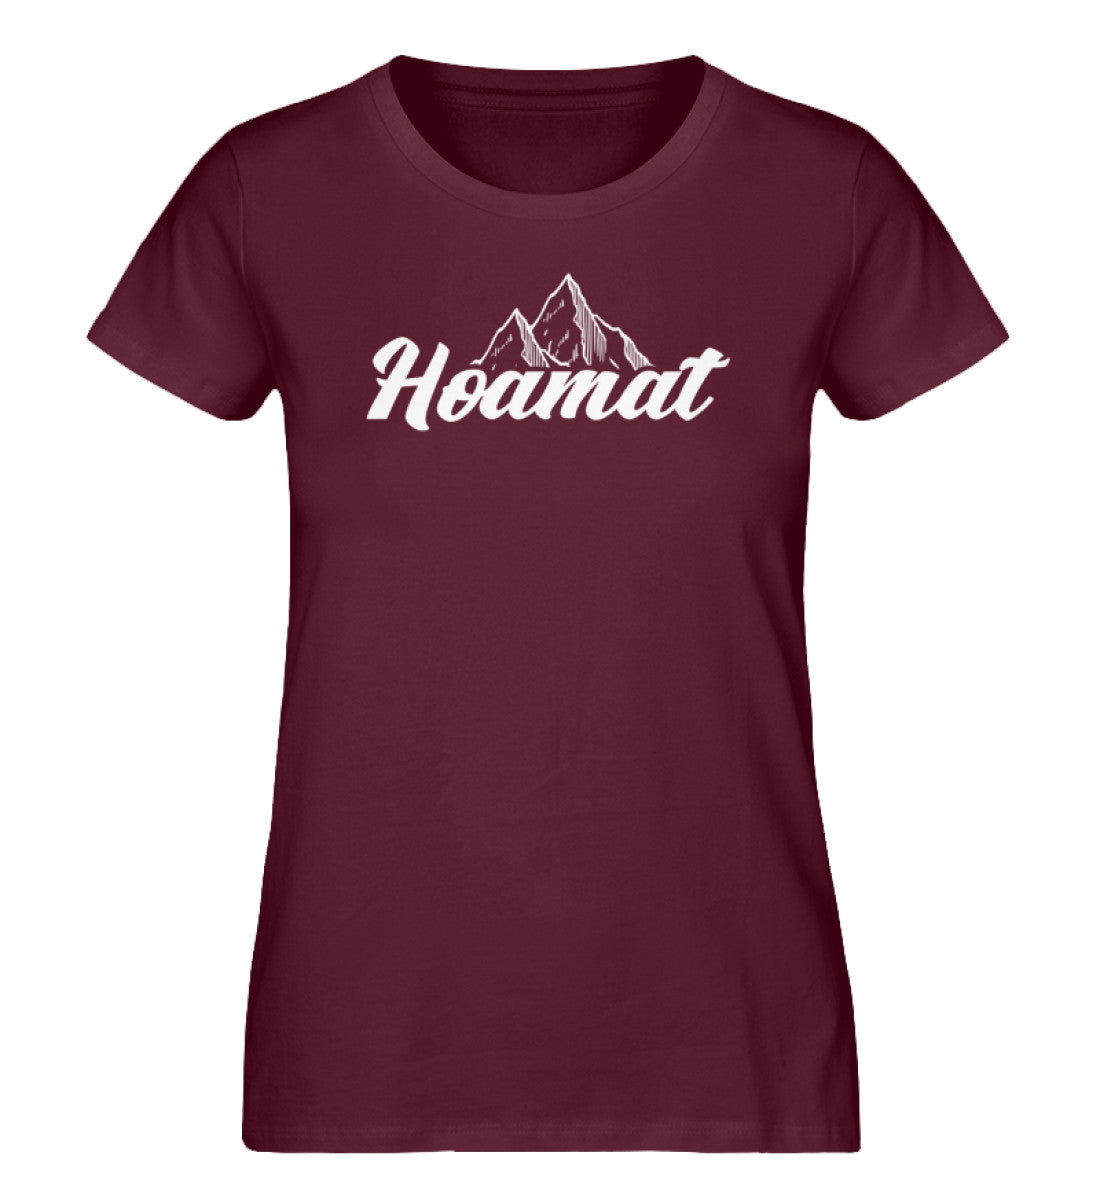 Hoamat - Damen Premium Organic T-Shirt berge Weinrot